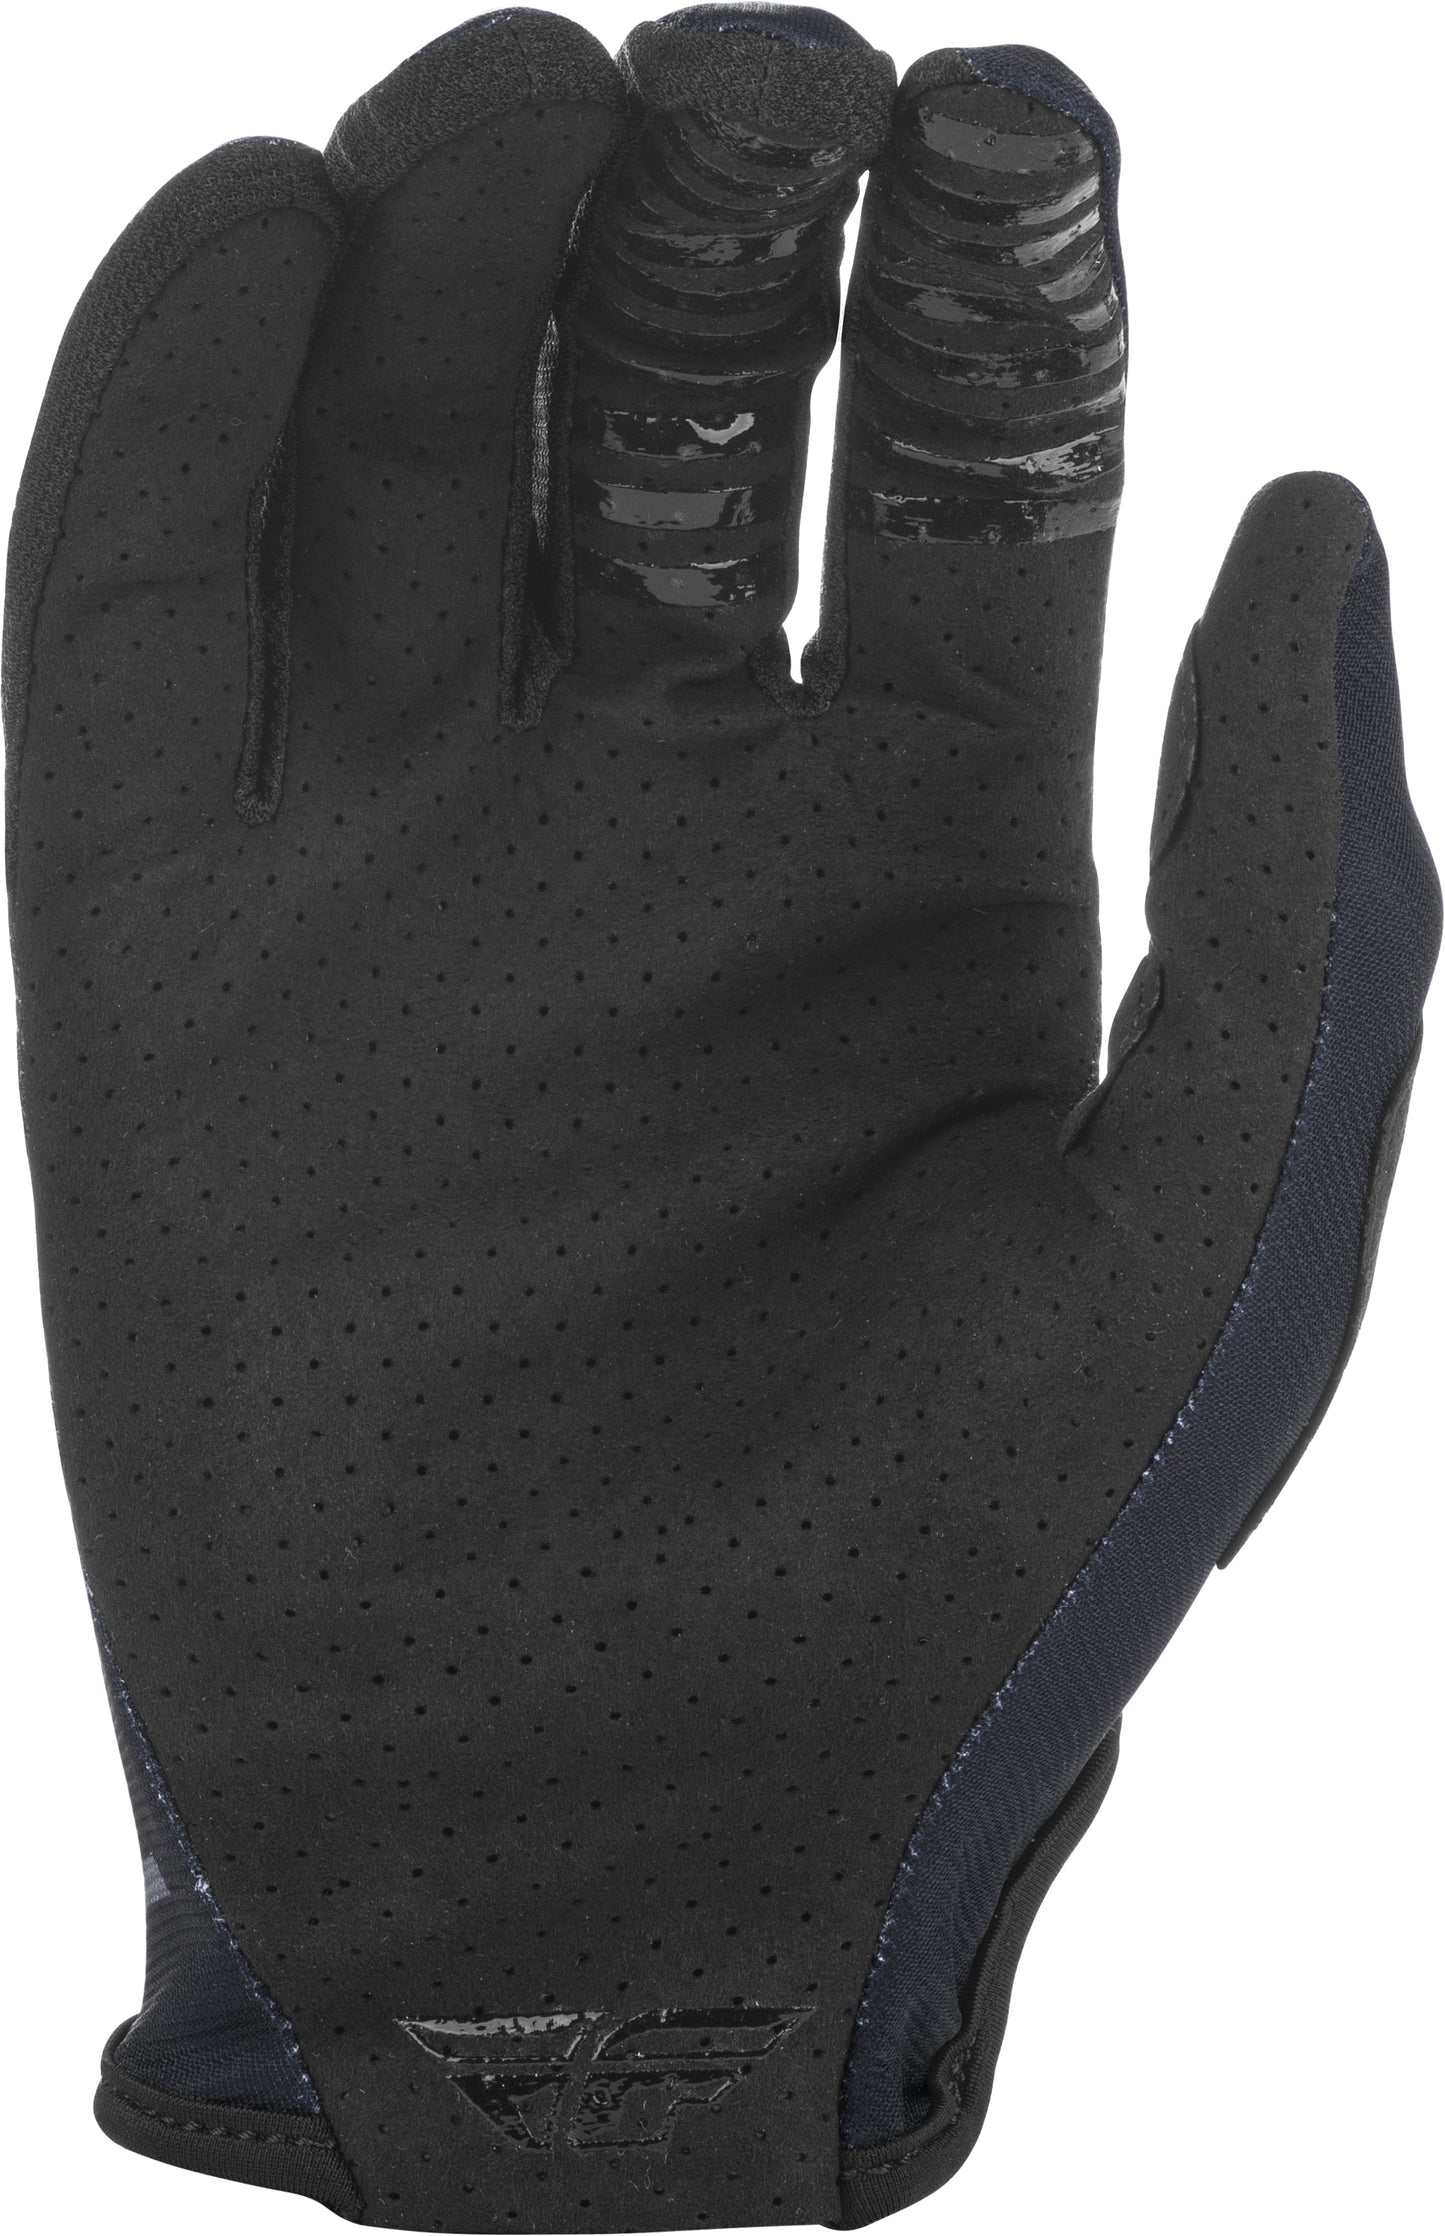 Lite Gloves Black/Grey Sz 12